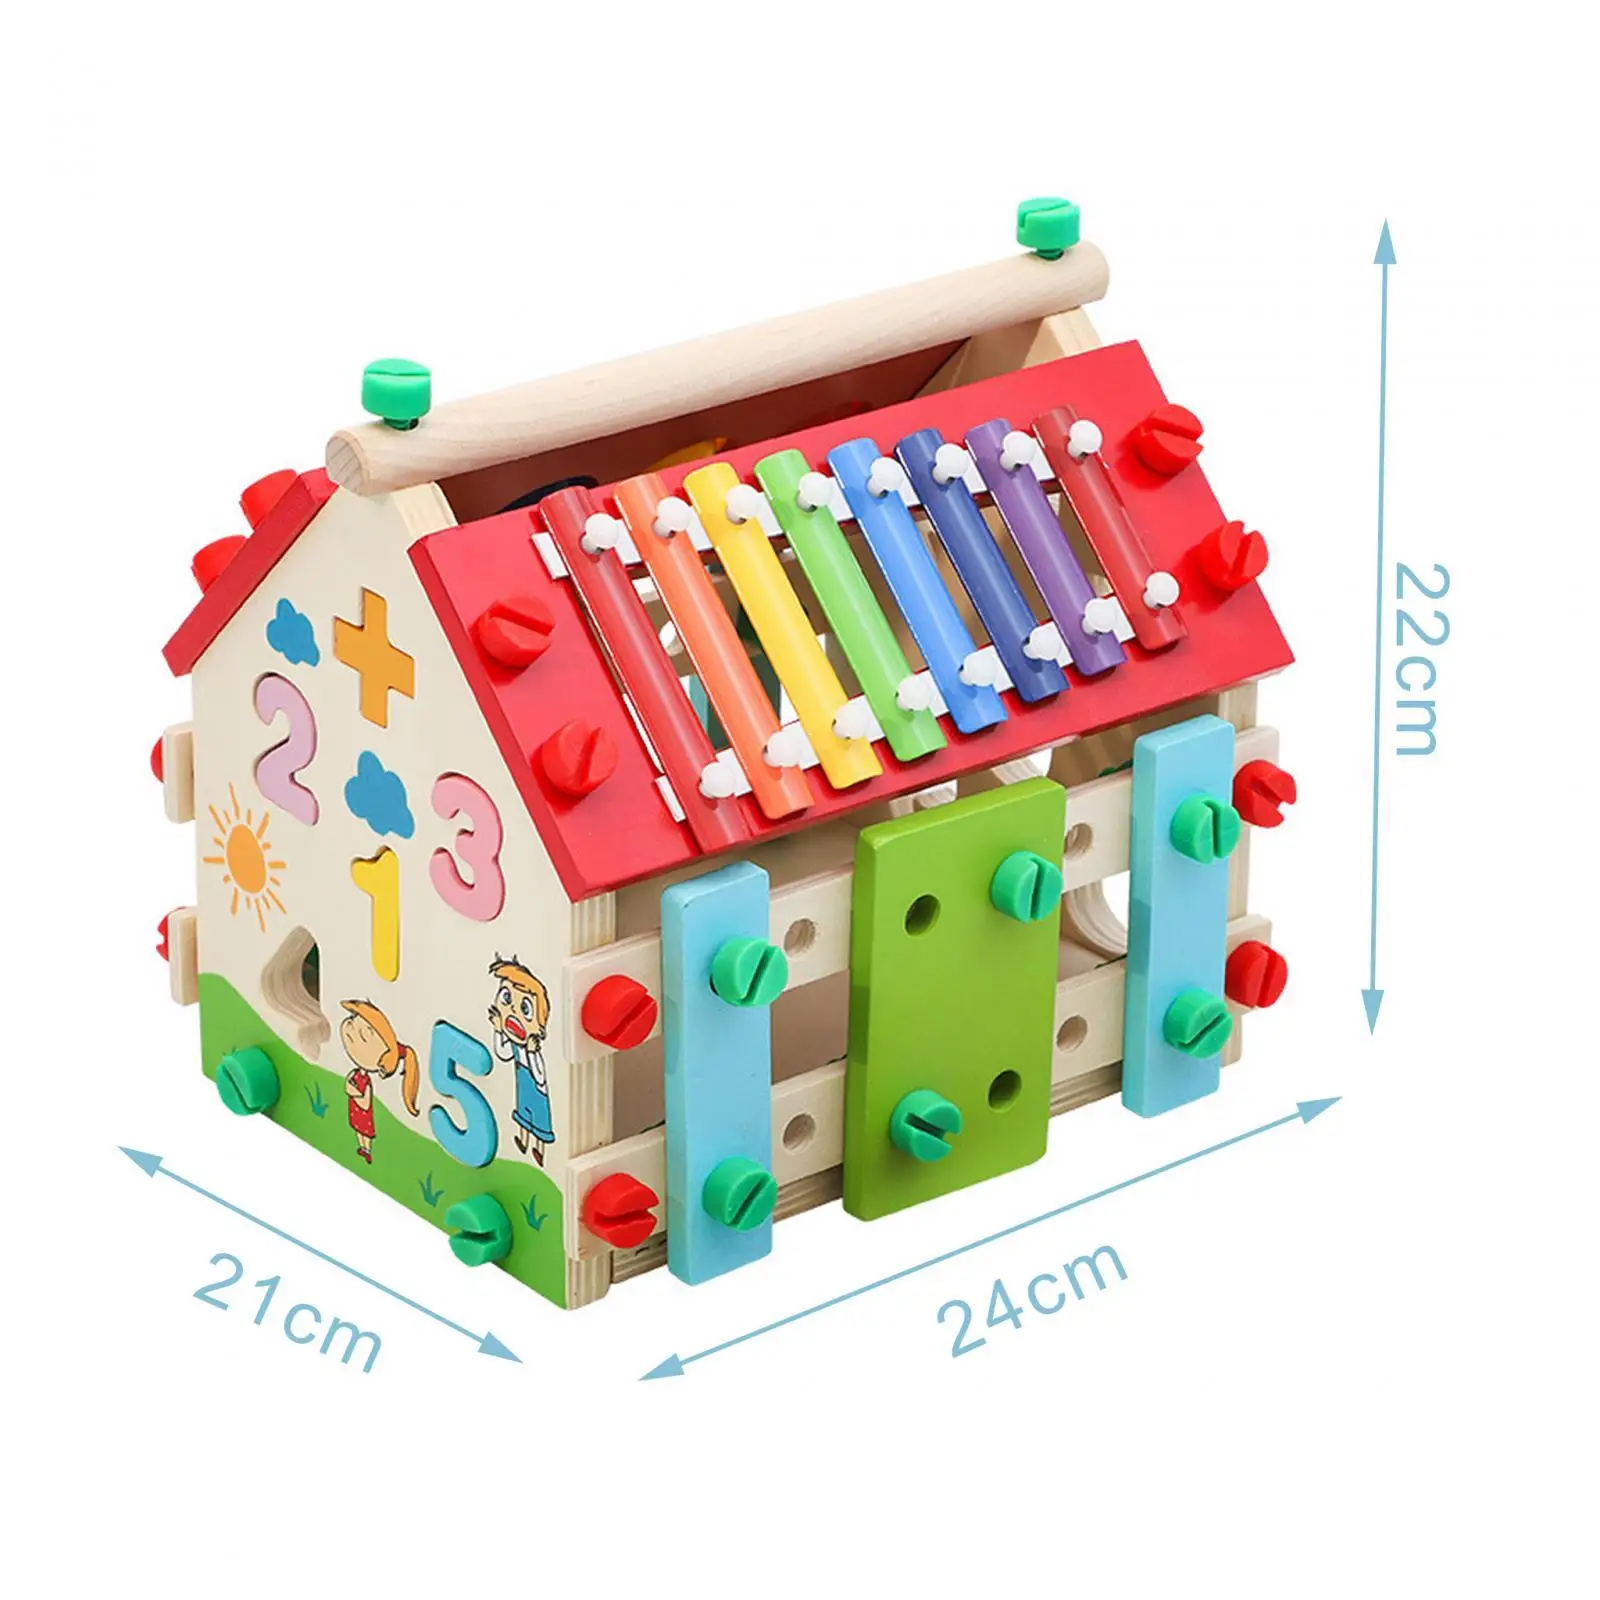 

Baby Activity Cube Toy Puzzle Toy Early Development Shape Sorter Box Baby Toy Montessori for Children Boys Girls Birthday Gift